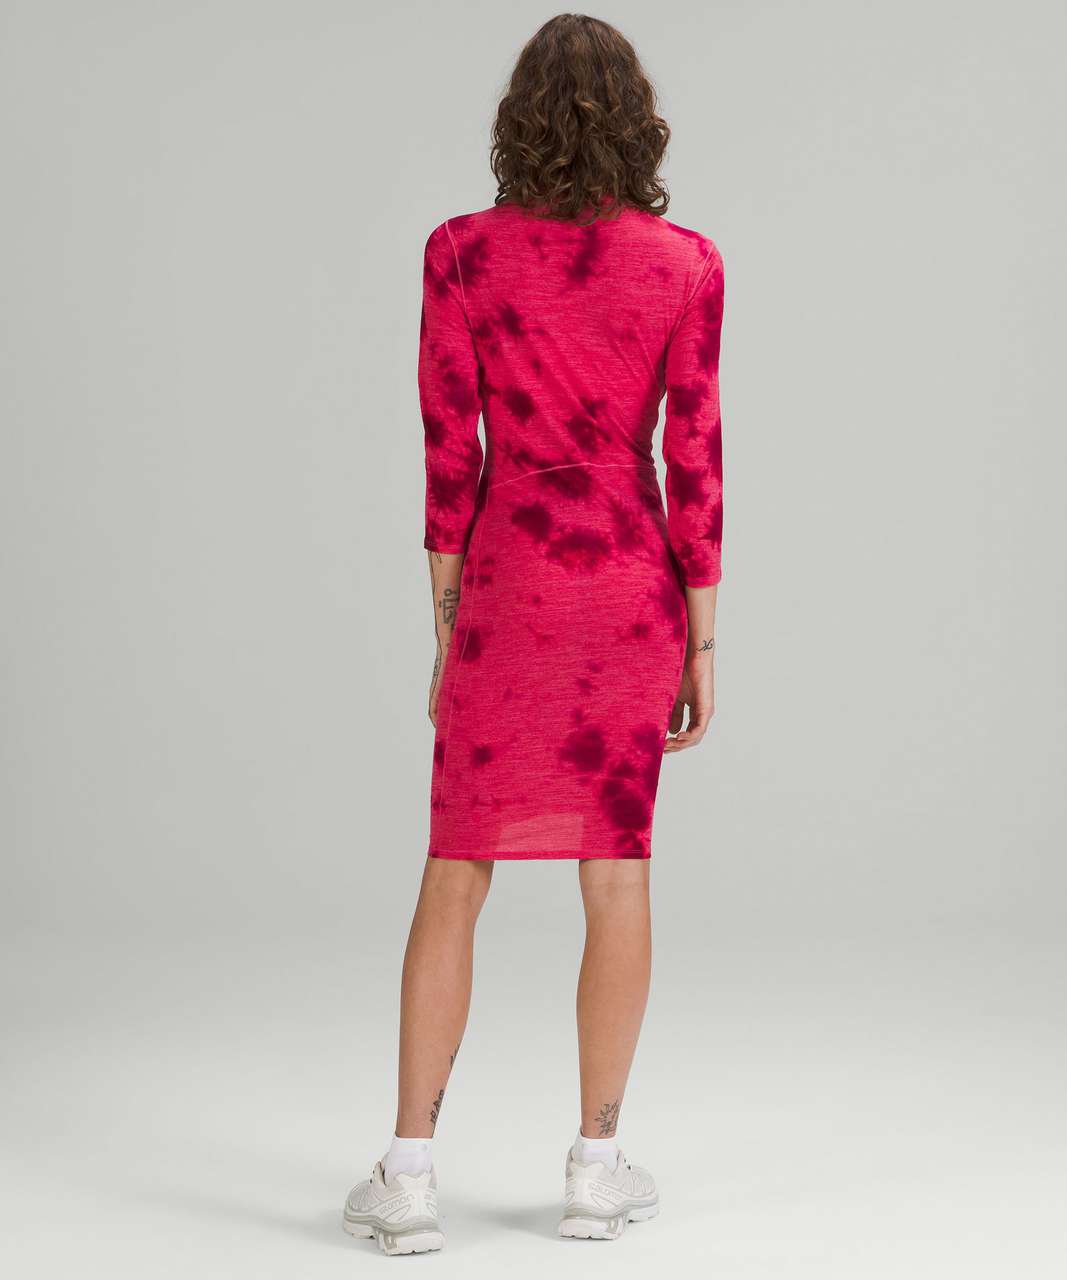 Lululemon lab Wool-Blend Tie Dye Dress - Mimic Tie Dye Pink Dragonfruit Wild Berry